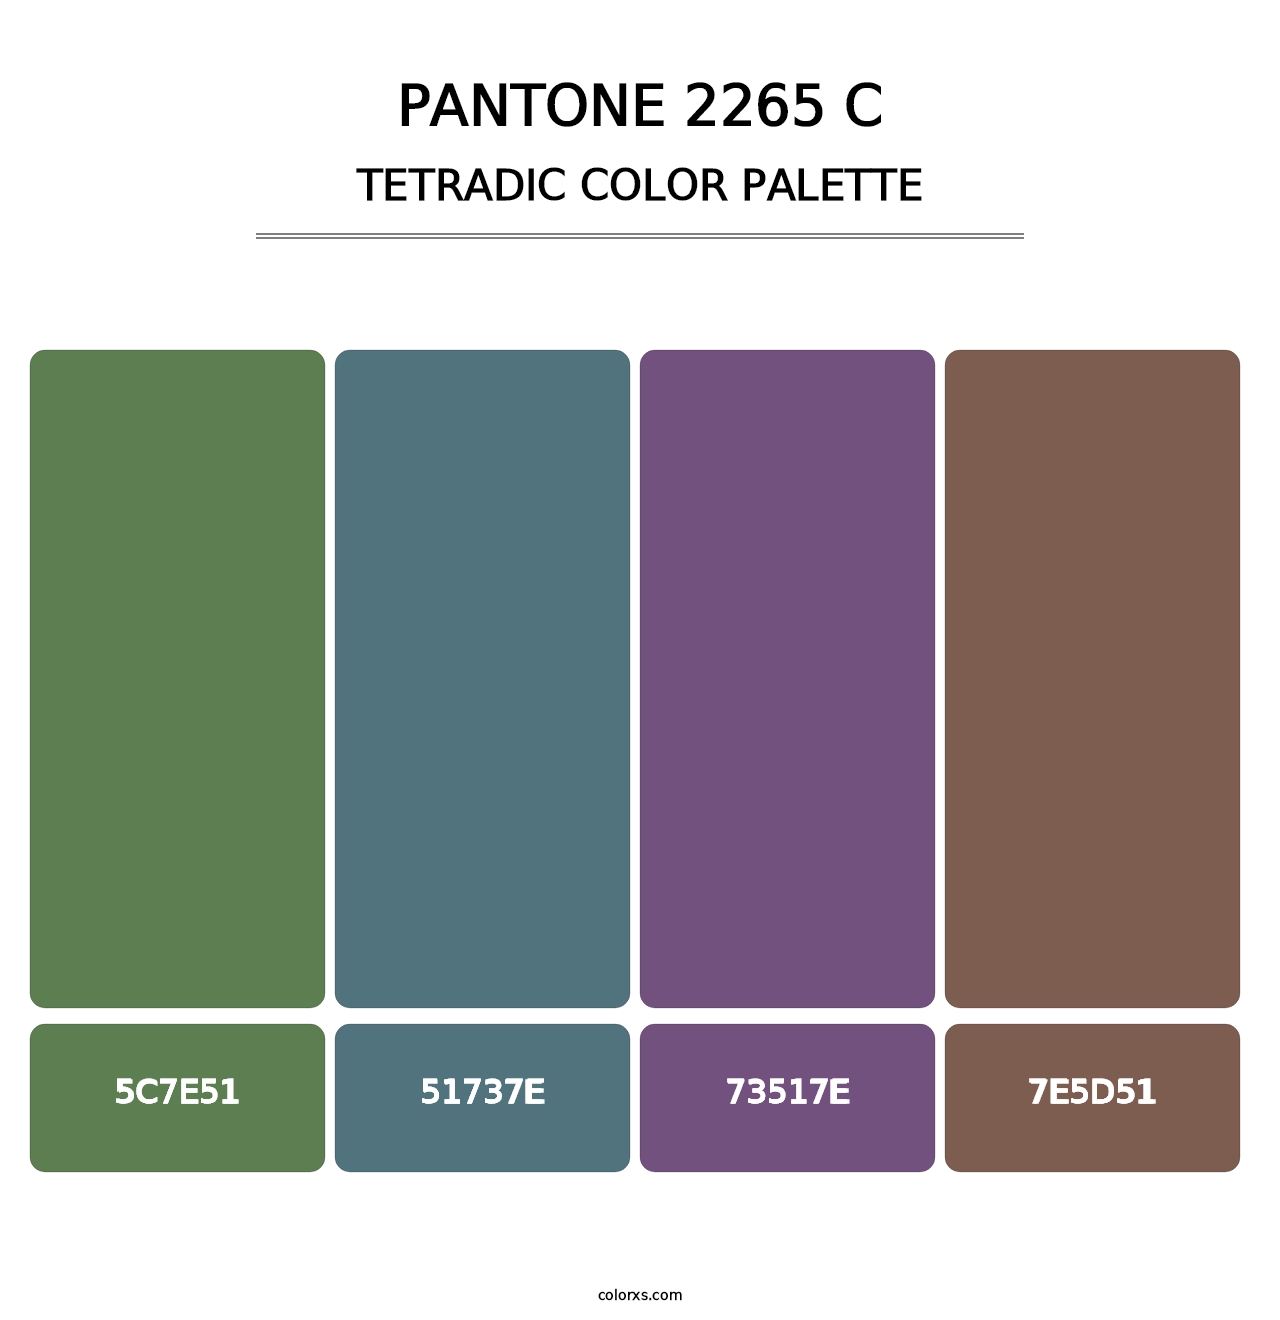 PANTONE 2265 C - Tetradic Color Palette